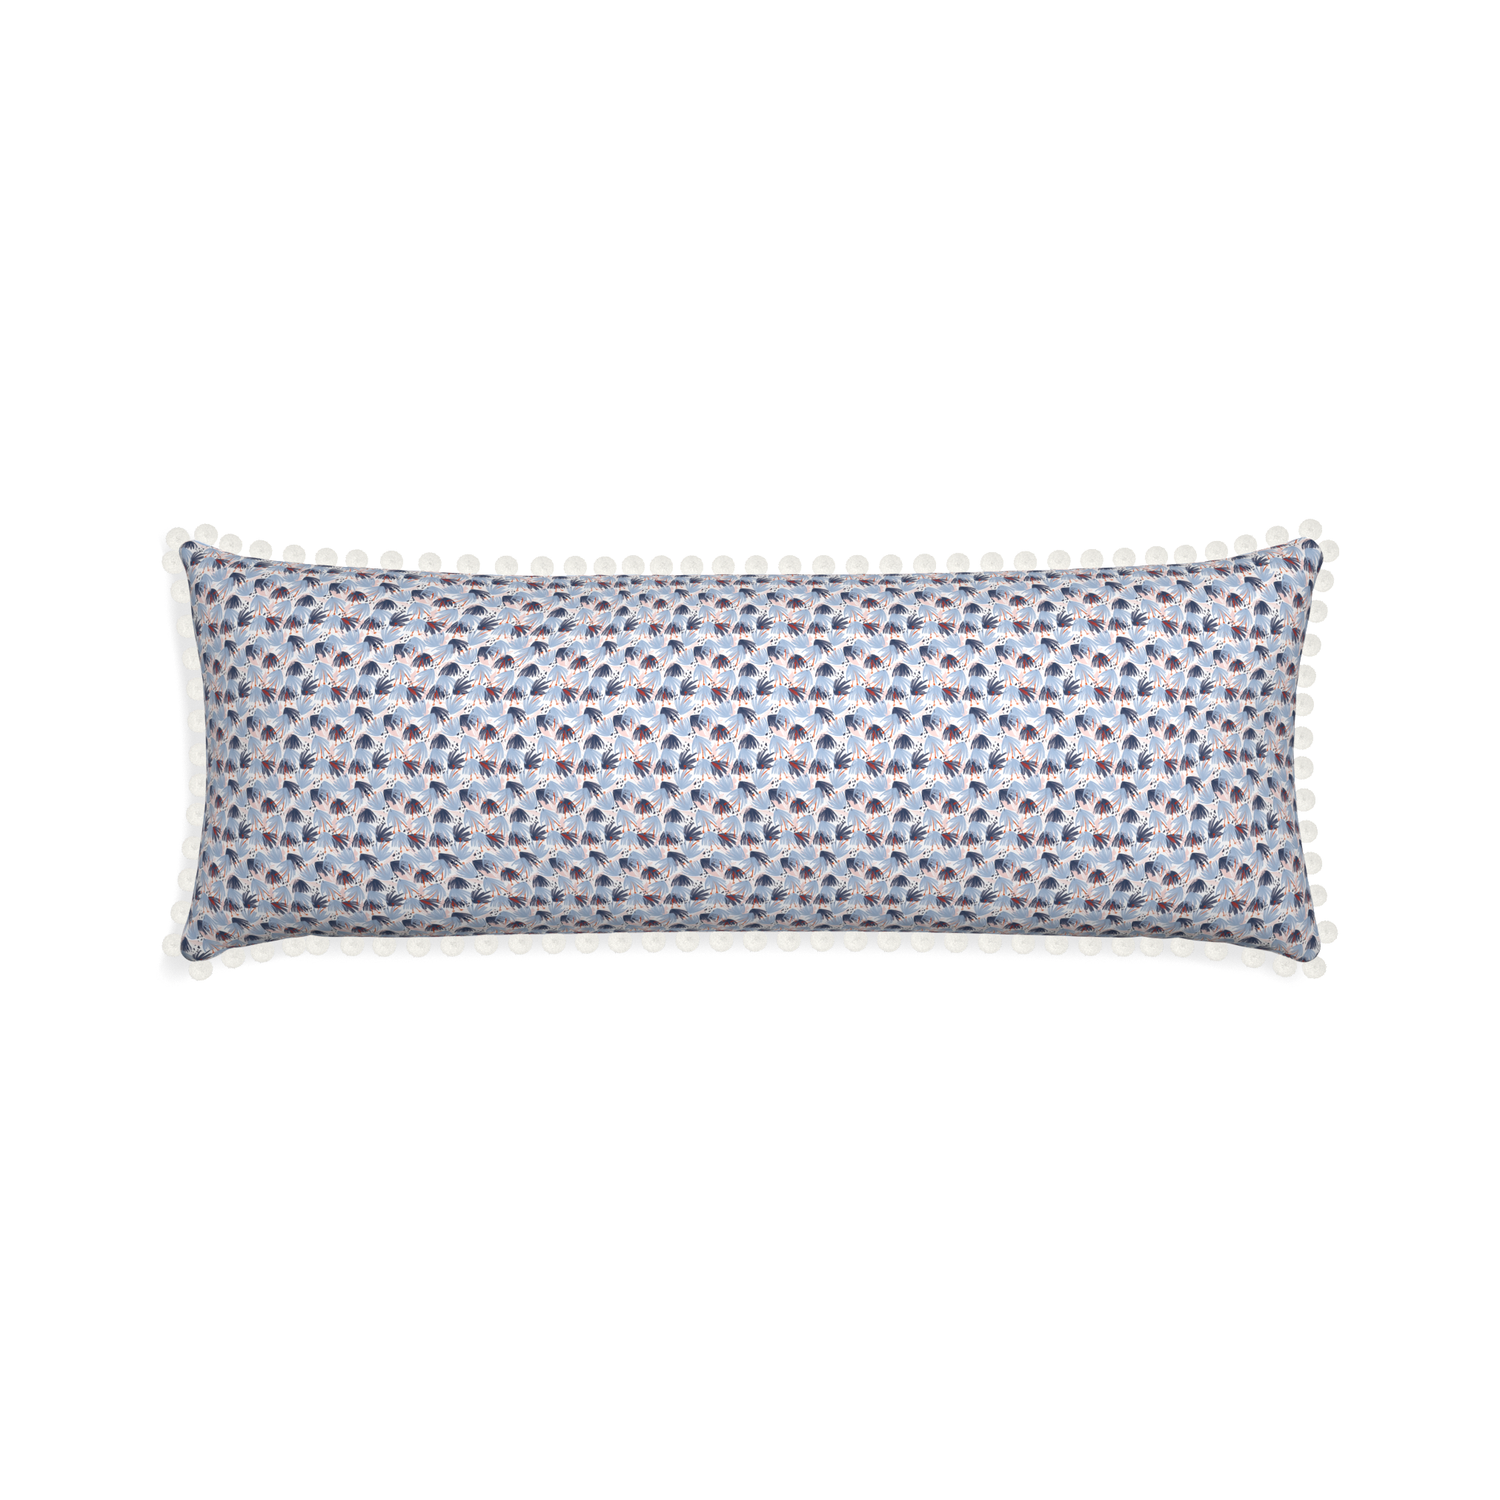 Xl-lumbar eden blue custom pillow with snow pom pom on white background